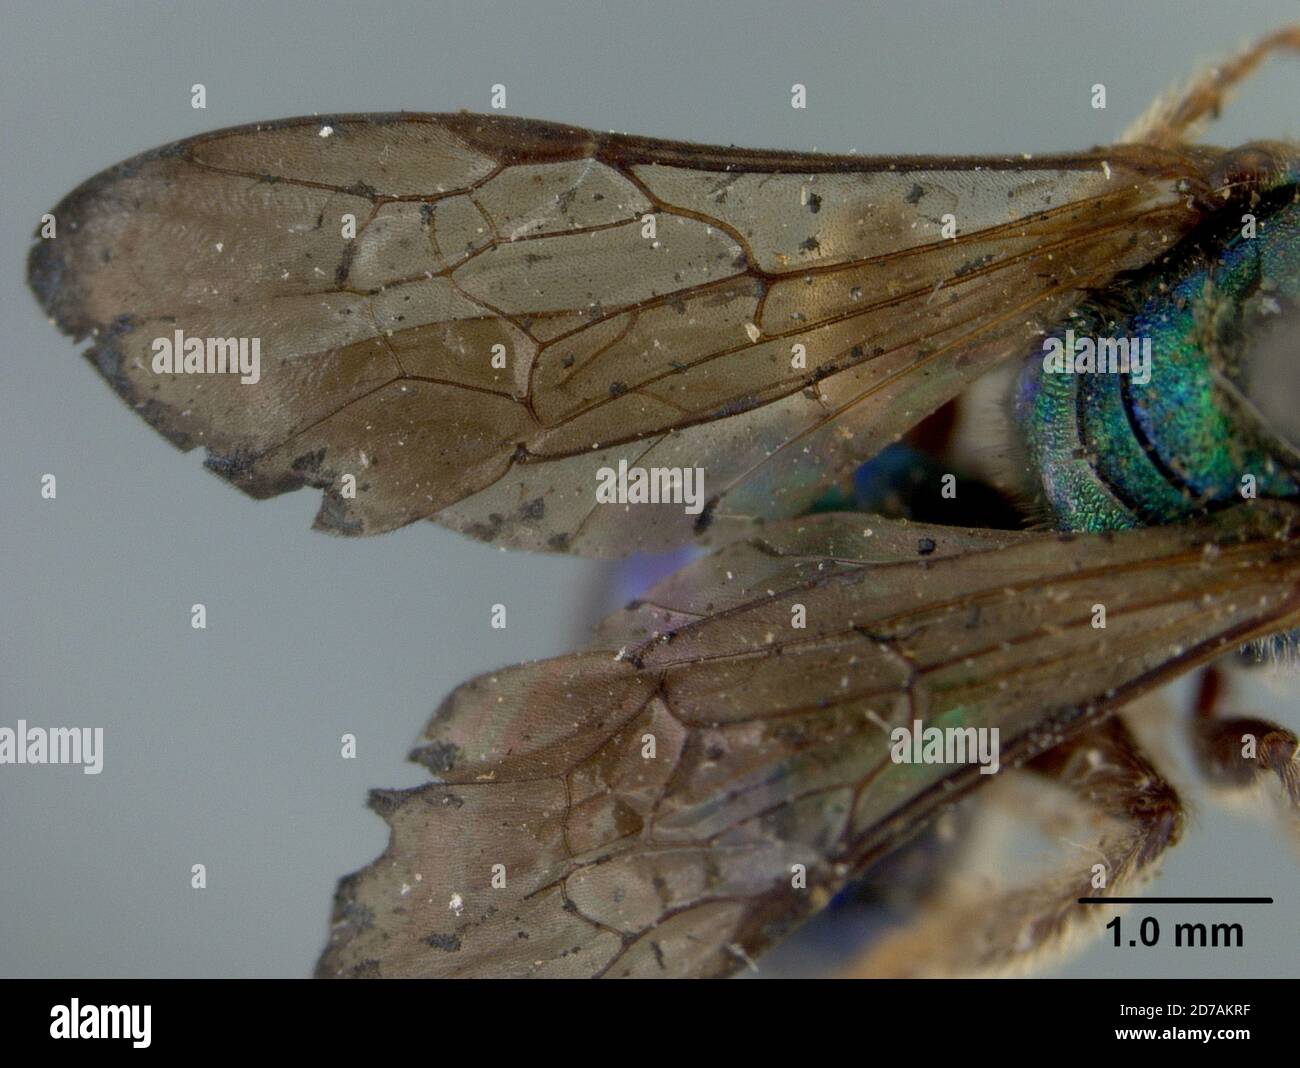 Pinned, Palm Beach, Florida, Stati Uniti, Augochora palmarum Cockerell, 1922, Animalia, Arthropoda, Insecta, Hymenoptera, Halictidae Foto Stock